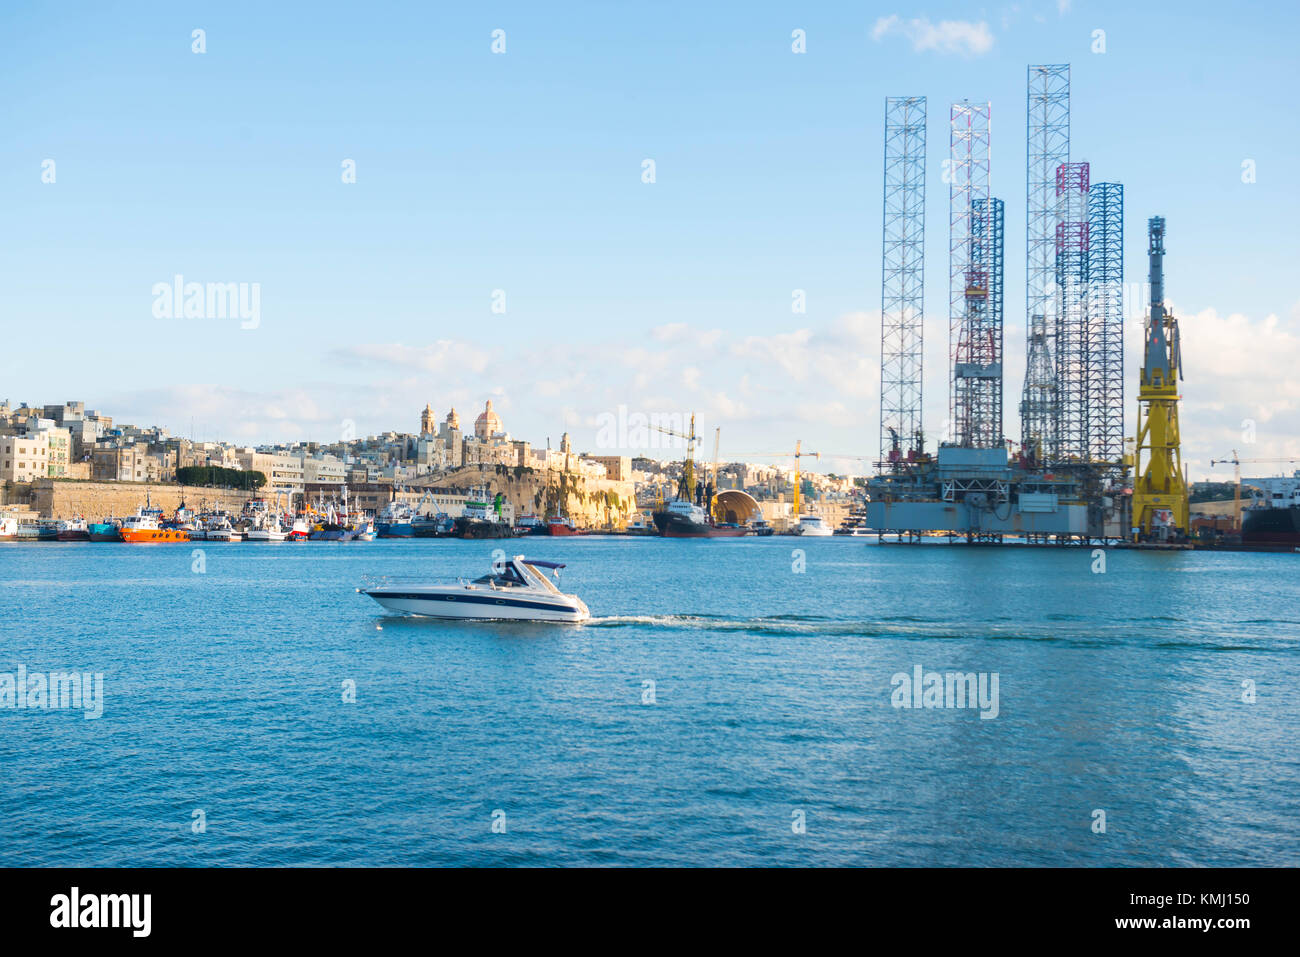 Malta, 7th December 2017. Port facilities and repair yards including the Transocean Amirante drilling rig platform Grand Harbour Valletta Malta Medite Stock Photo